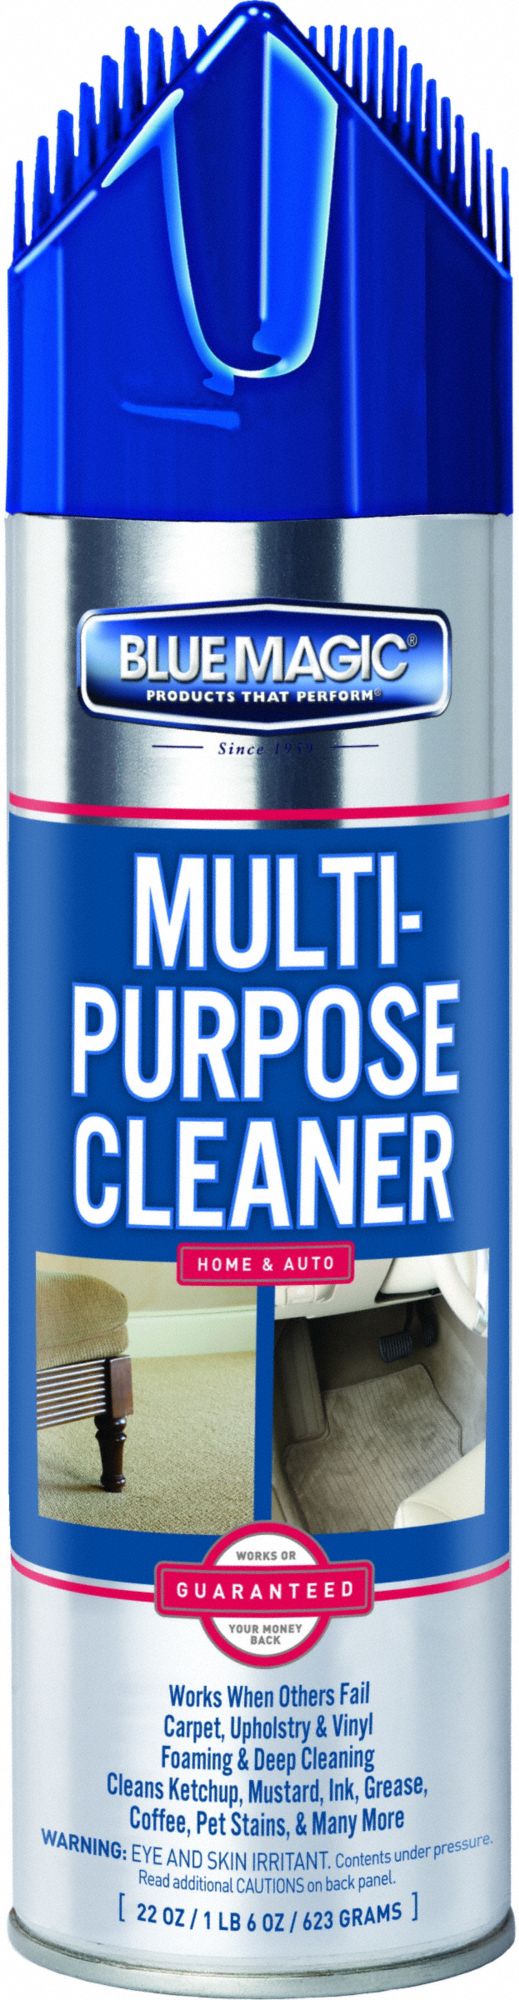 Blue Magic Multi-Purpose Cleaner, Home & Auto - 22 oz